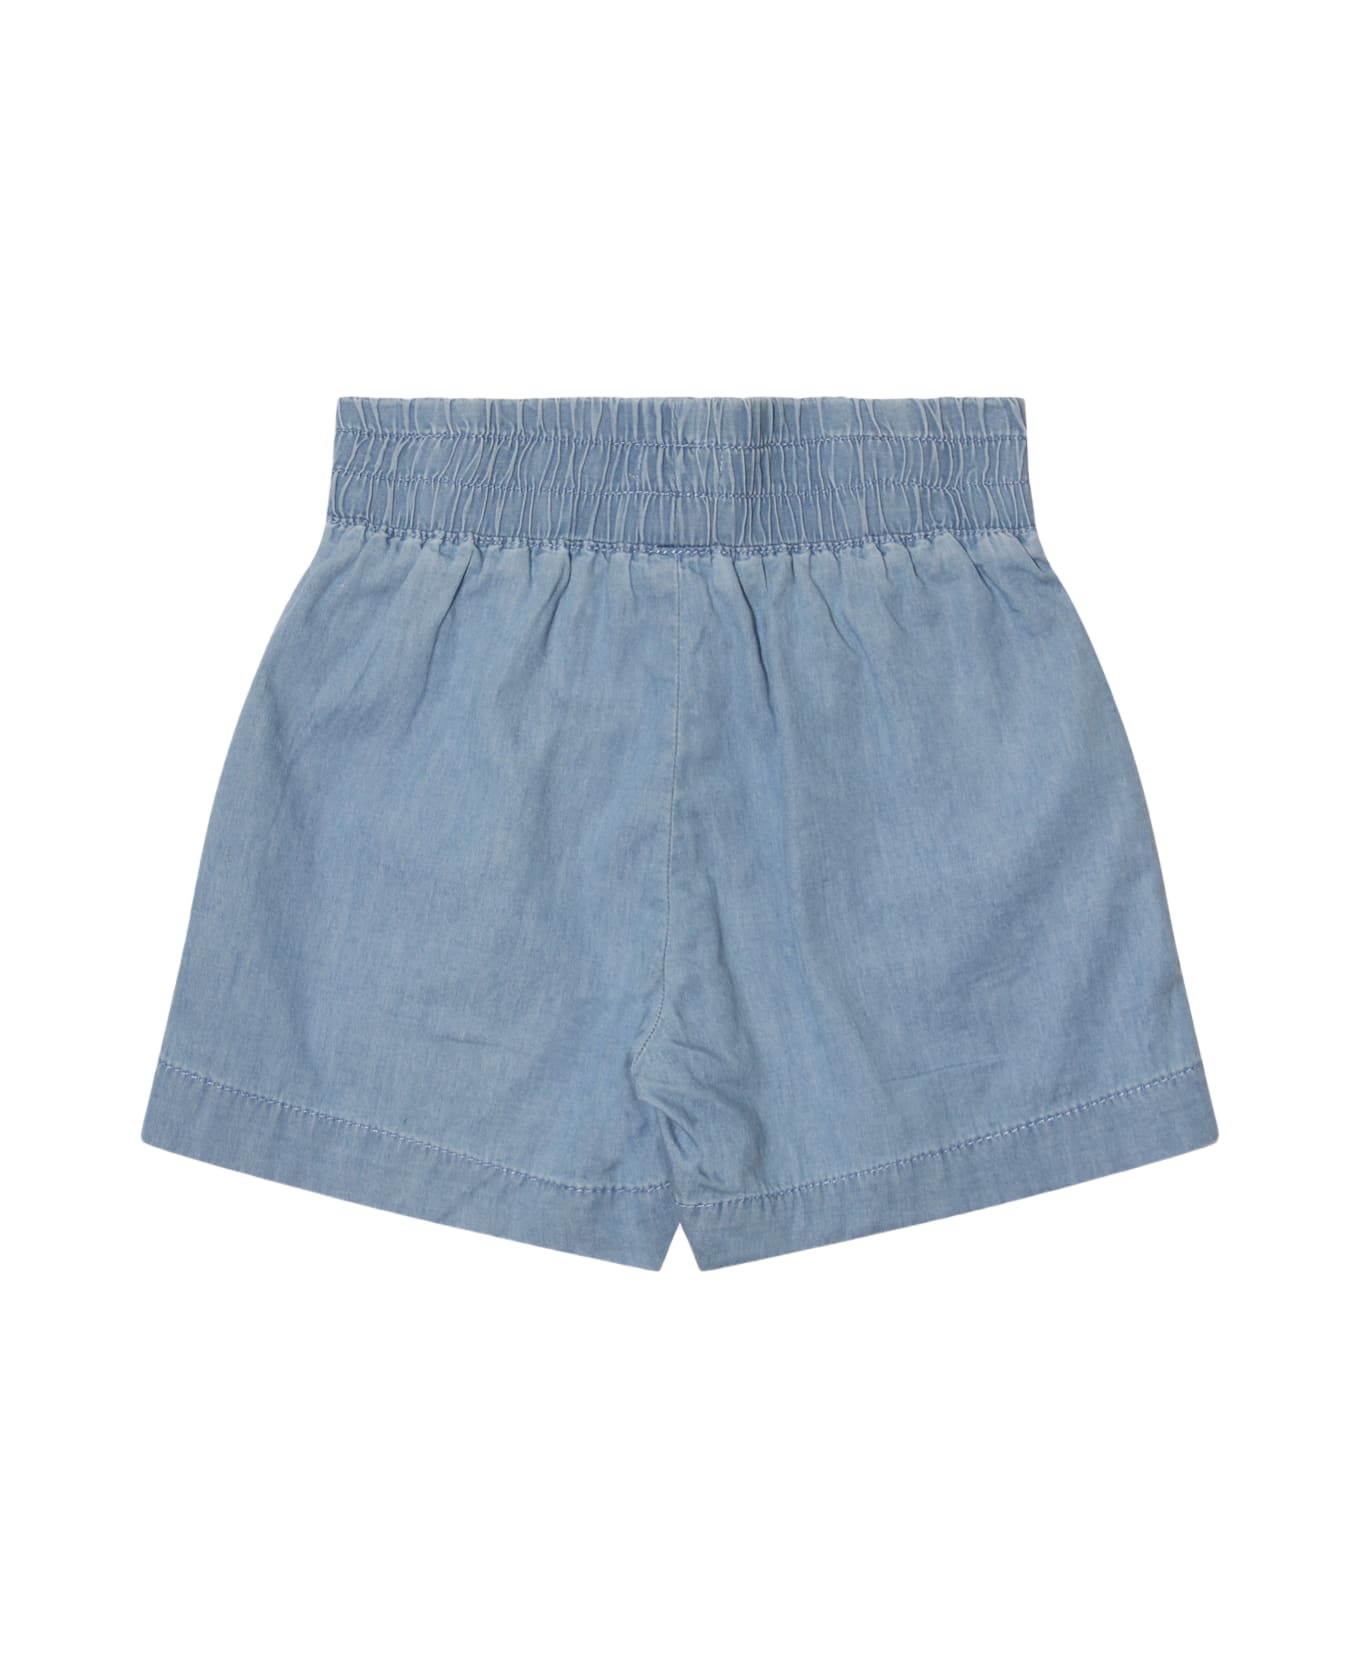 Billieblush Blue Cotton Shorts - DOUBLE STONE/BROSSAGE ボトムス